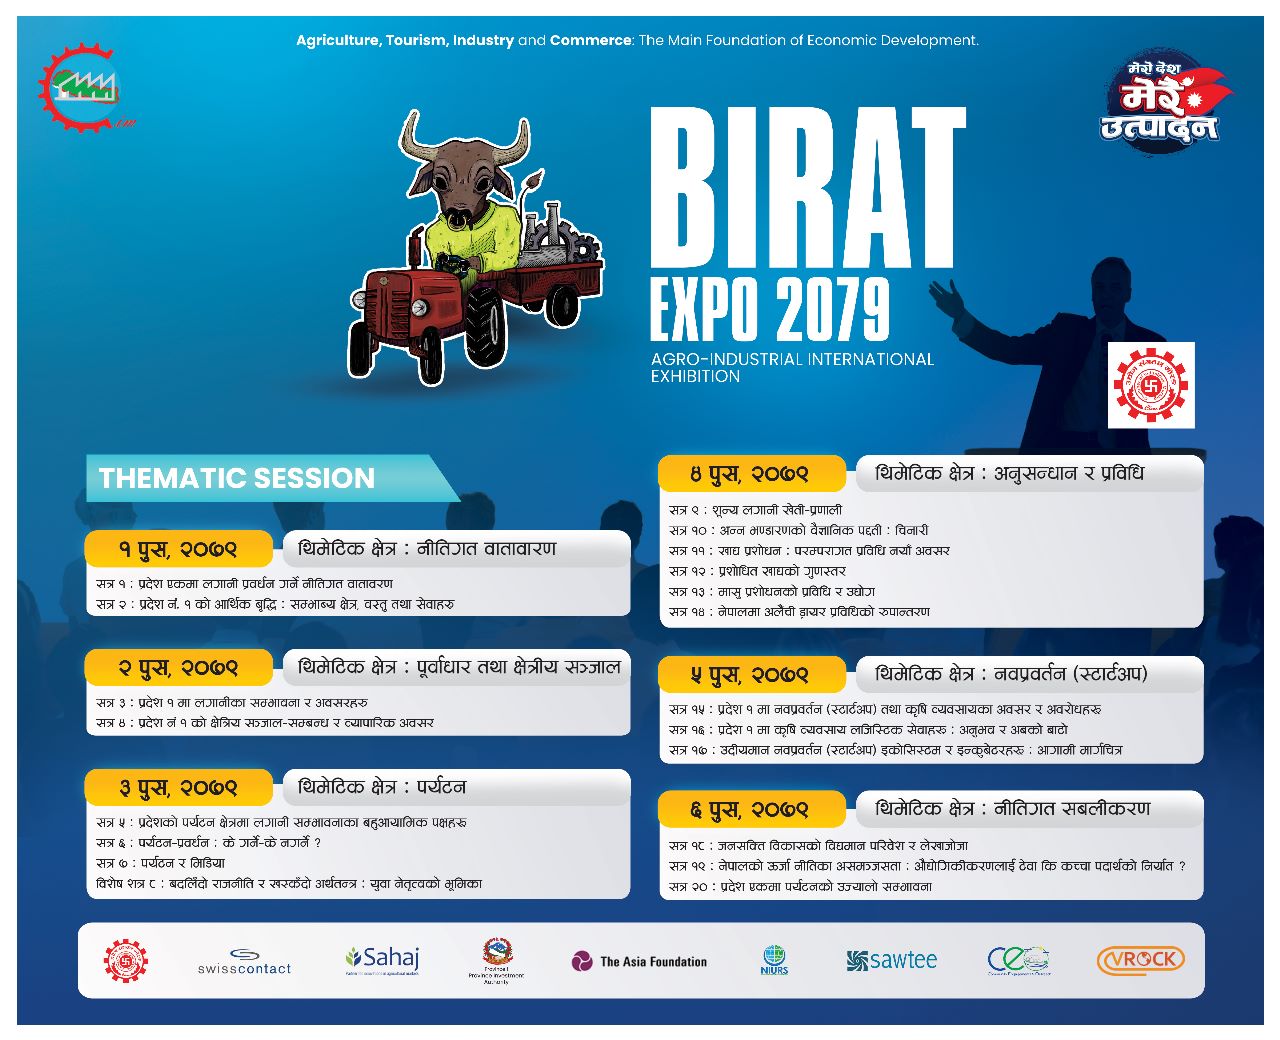 Birat Expo panel discussion image